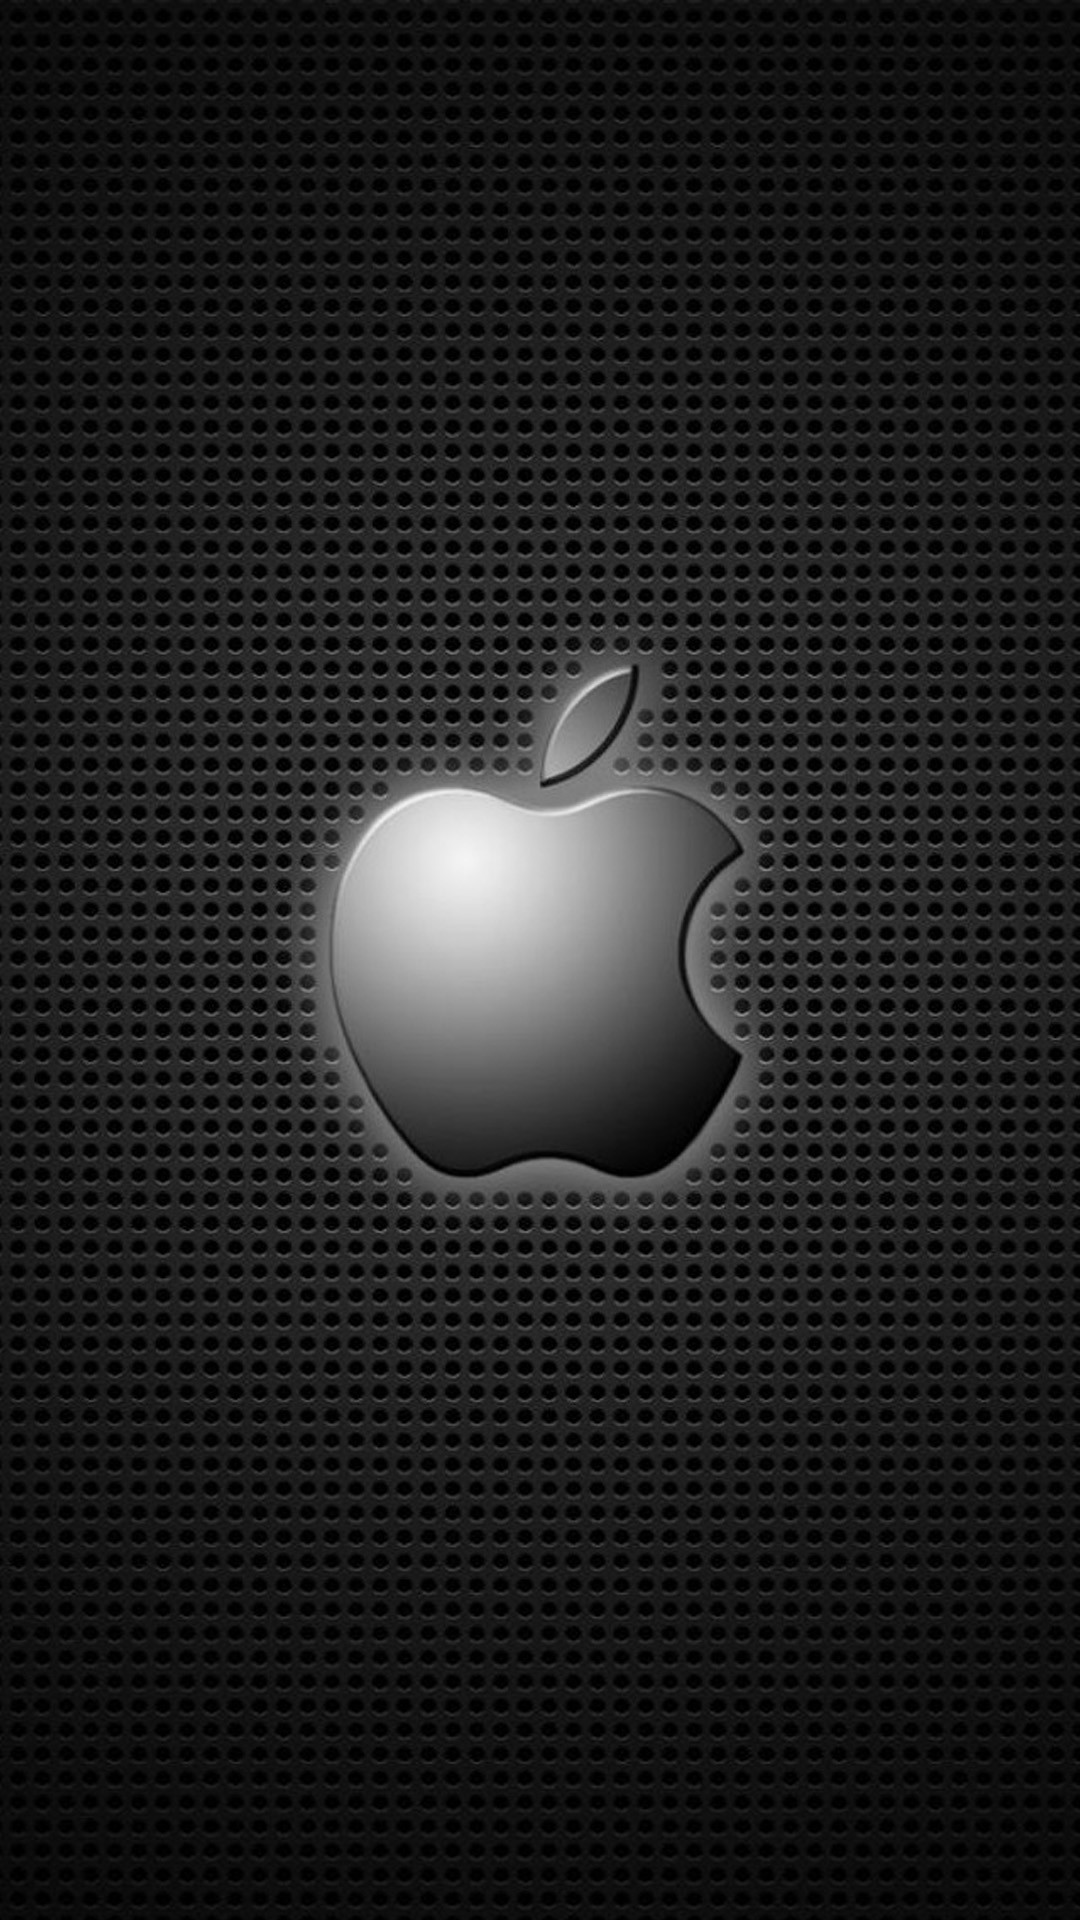 1080x1920 Apple Logo LG G2 Wallpapers HD 373